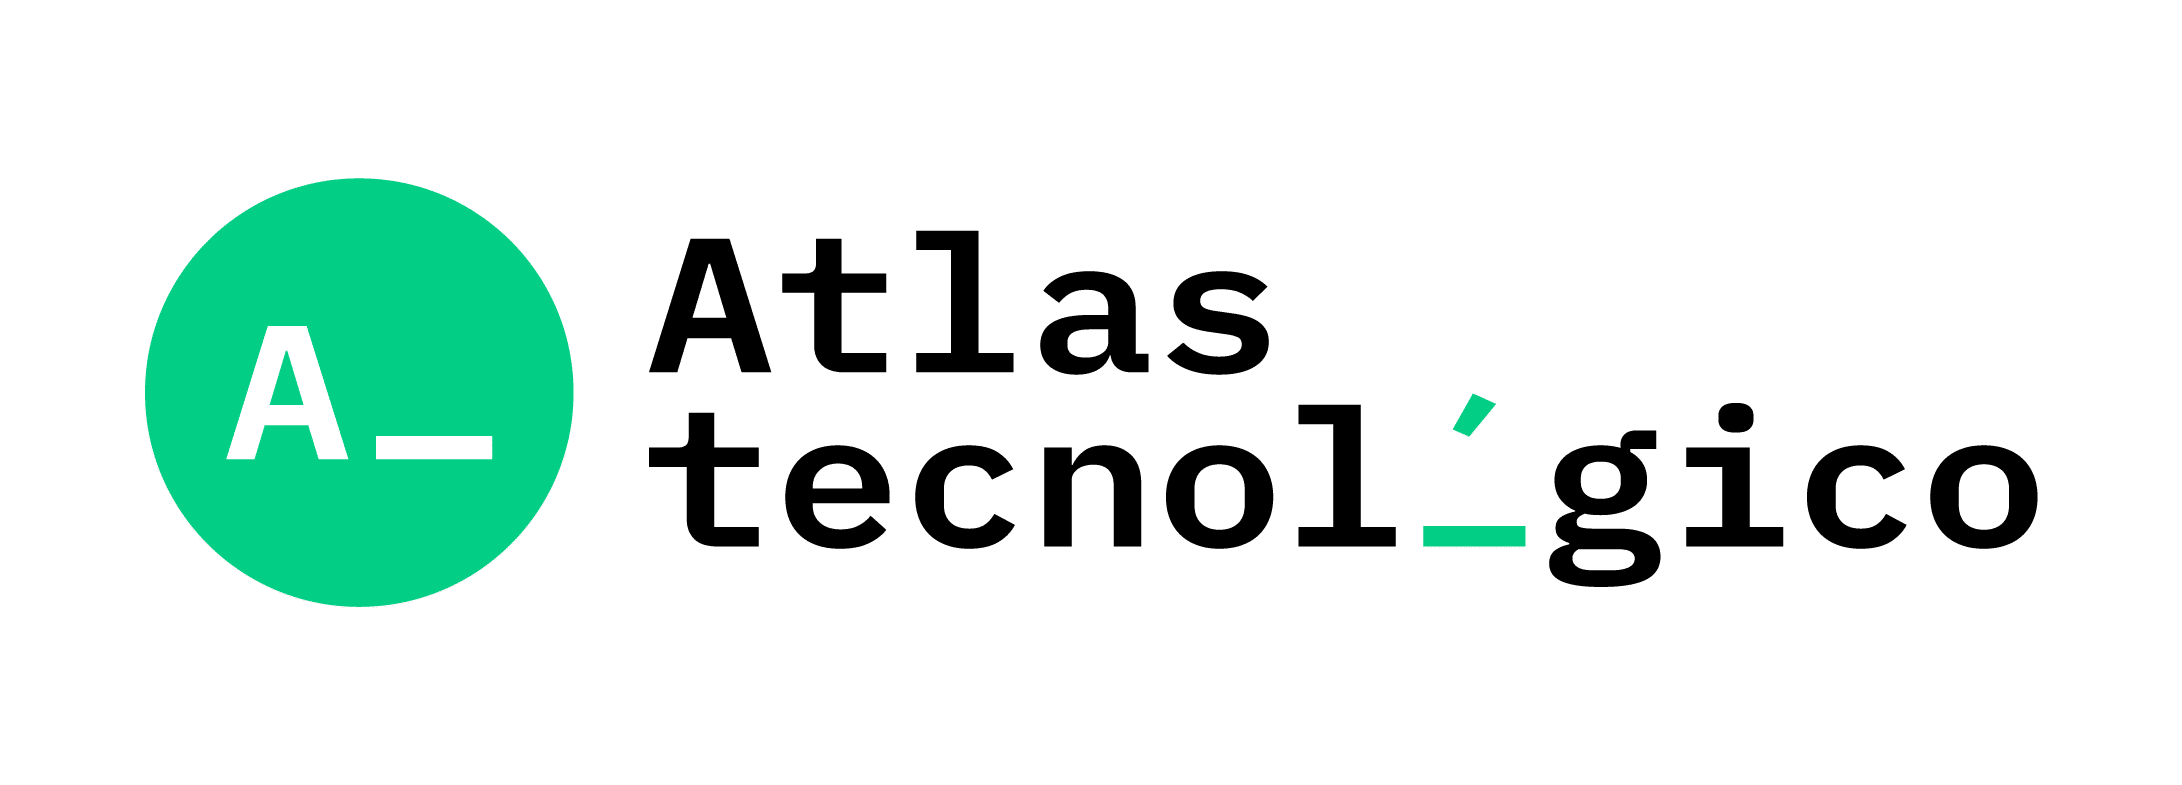 Partner Atlas tecnológico